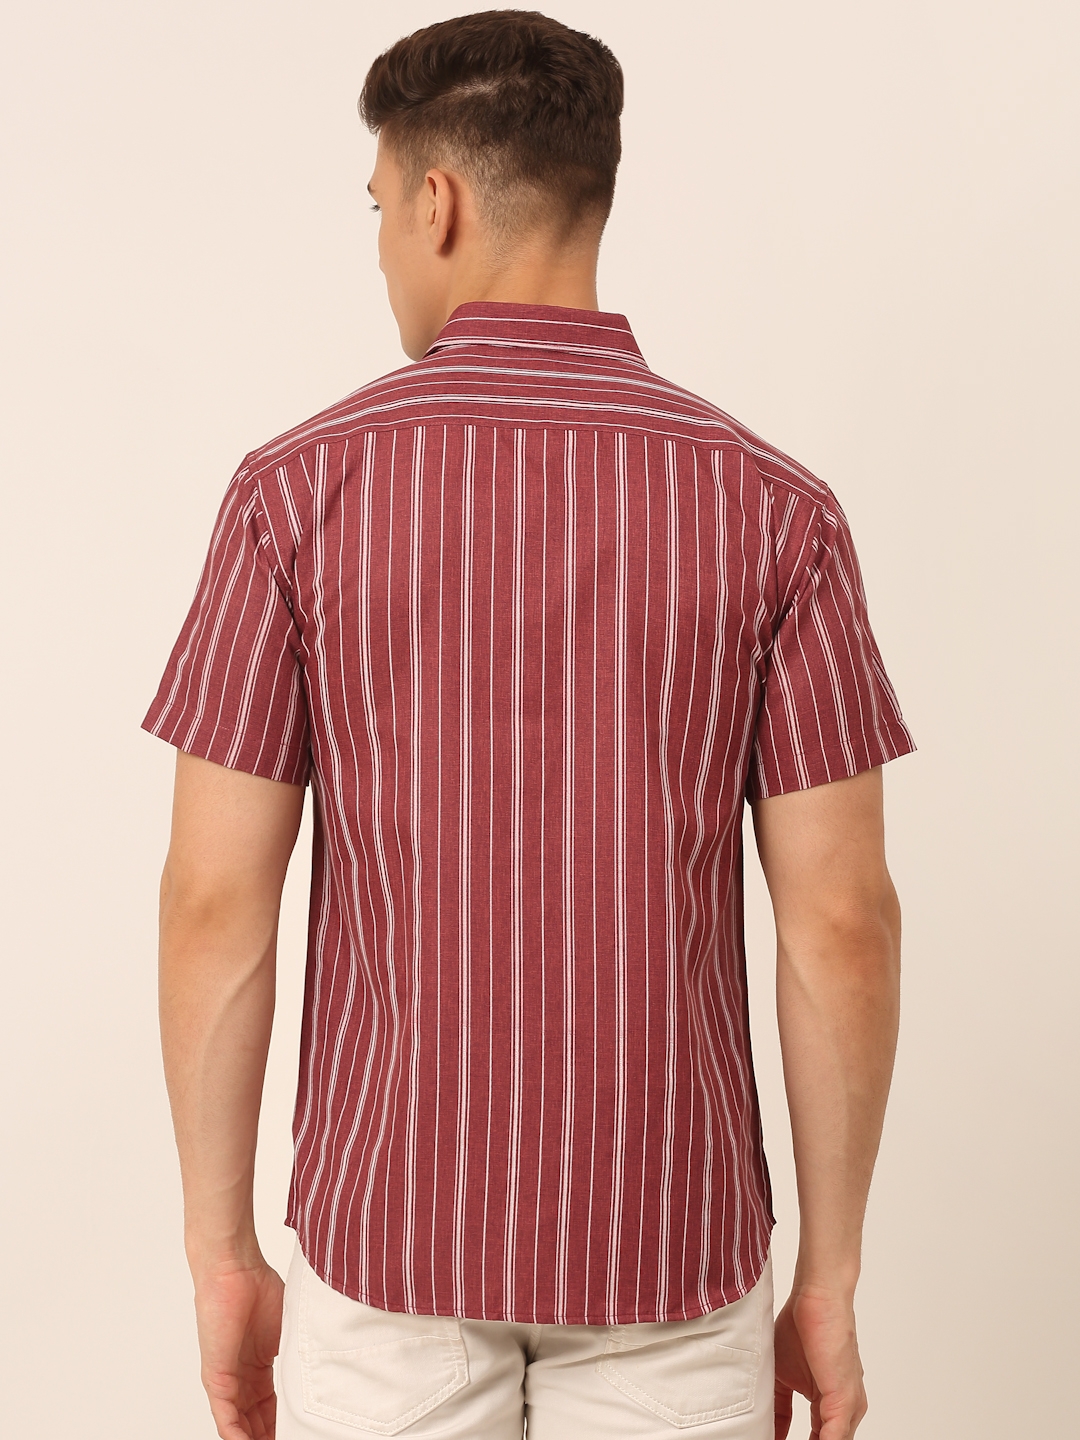 Jainish | Men's Cotton Striped Casual Shirts 2